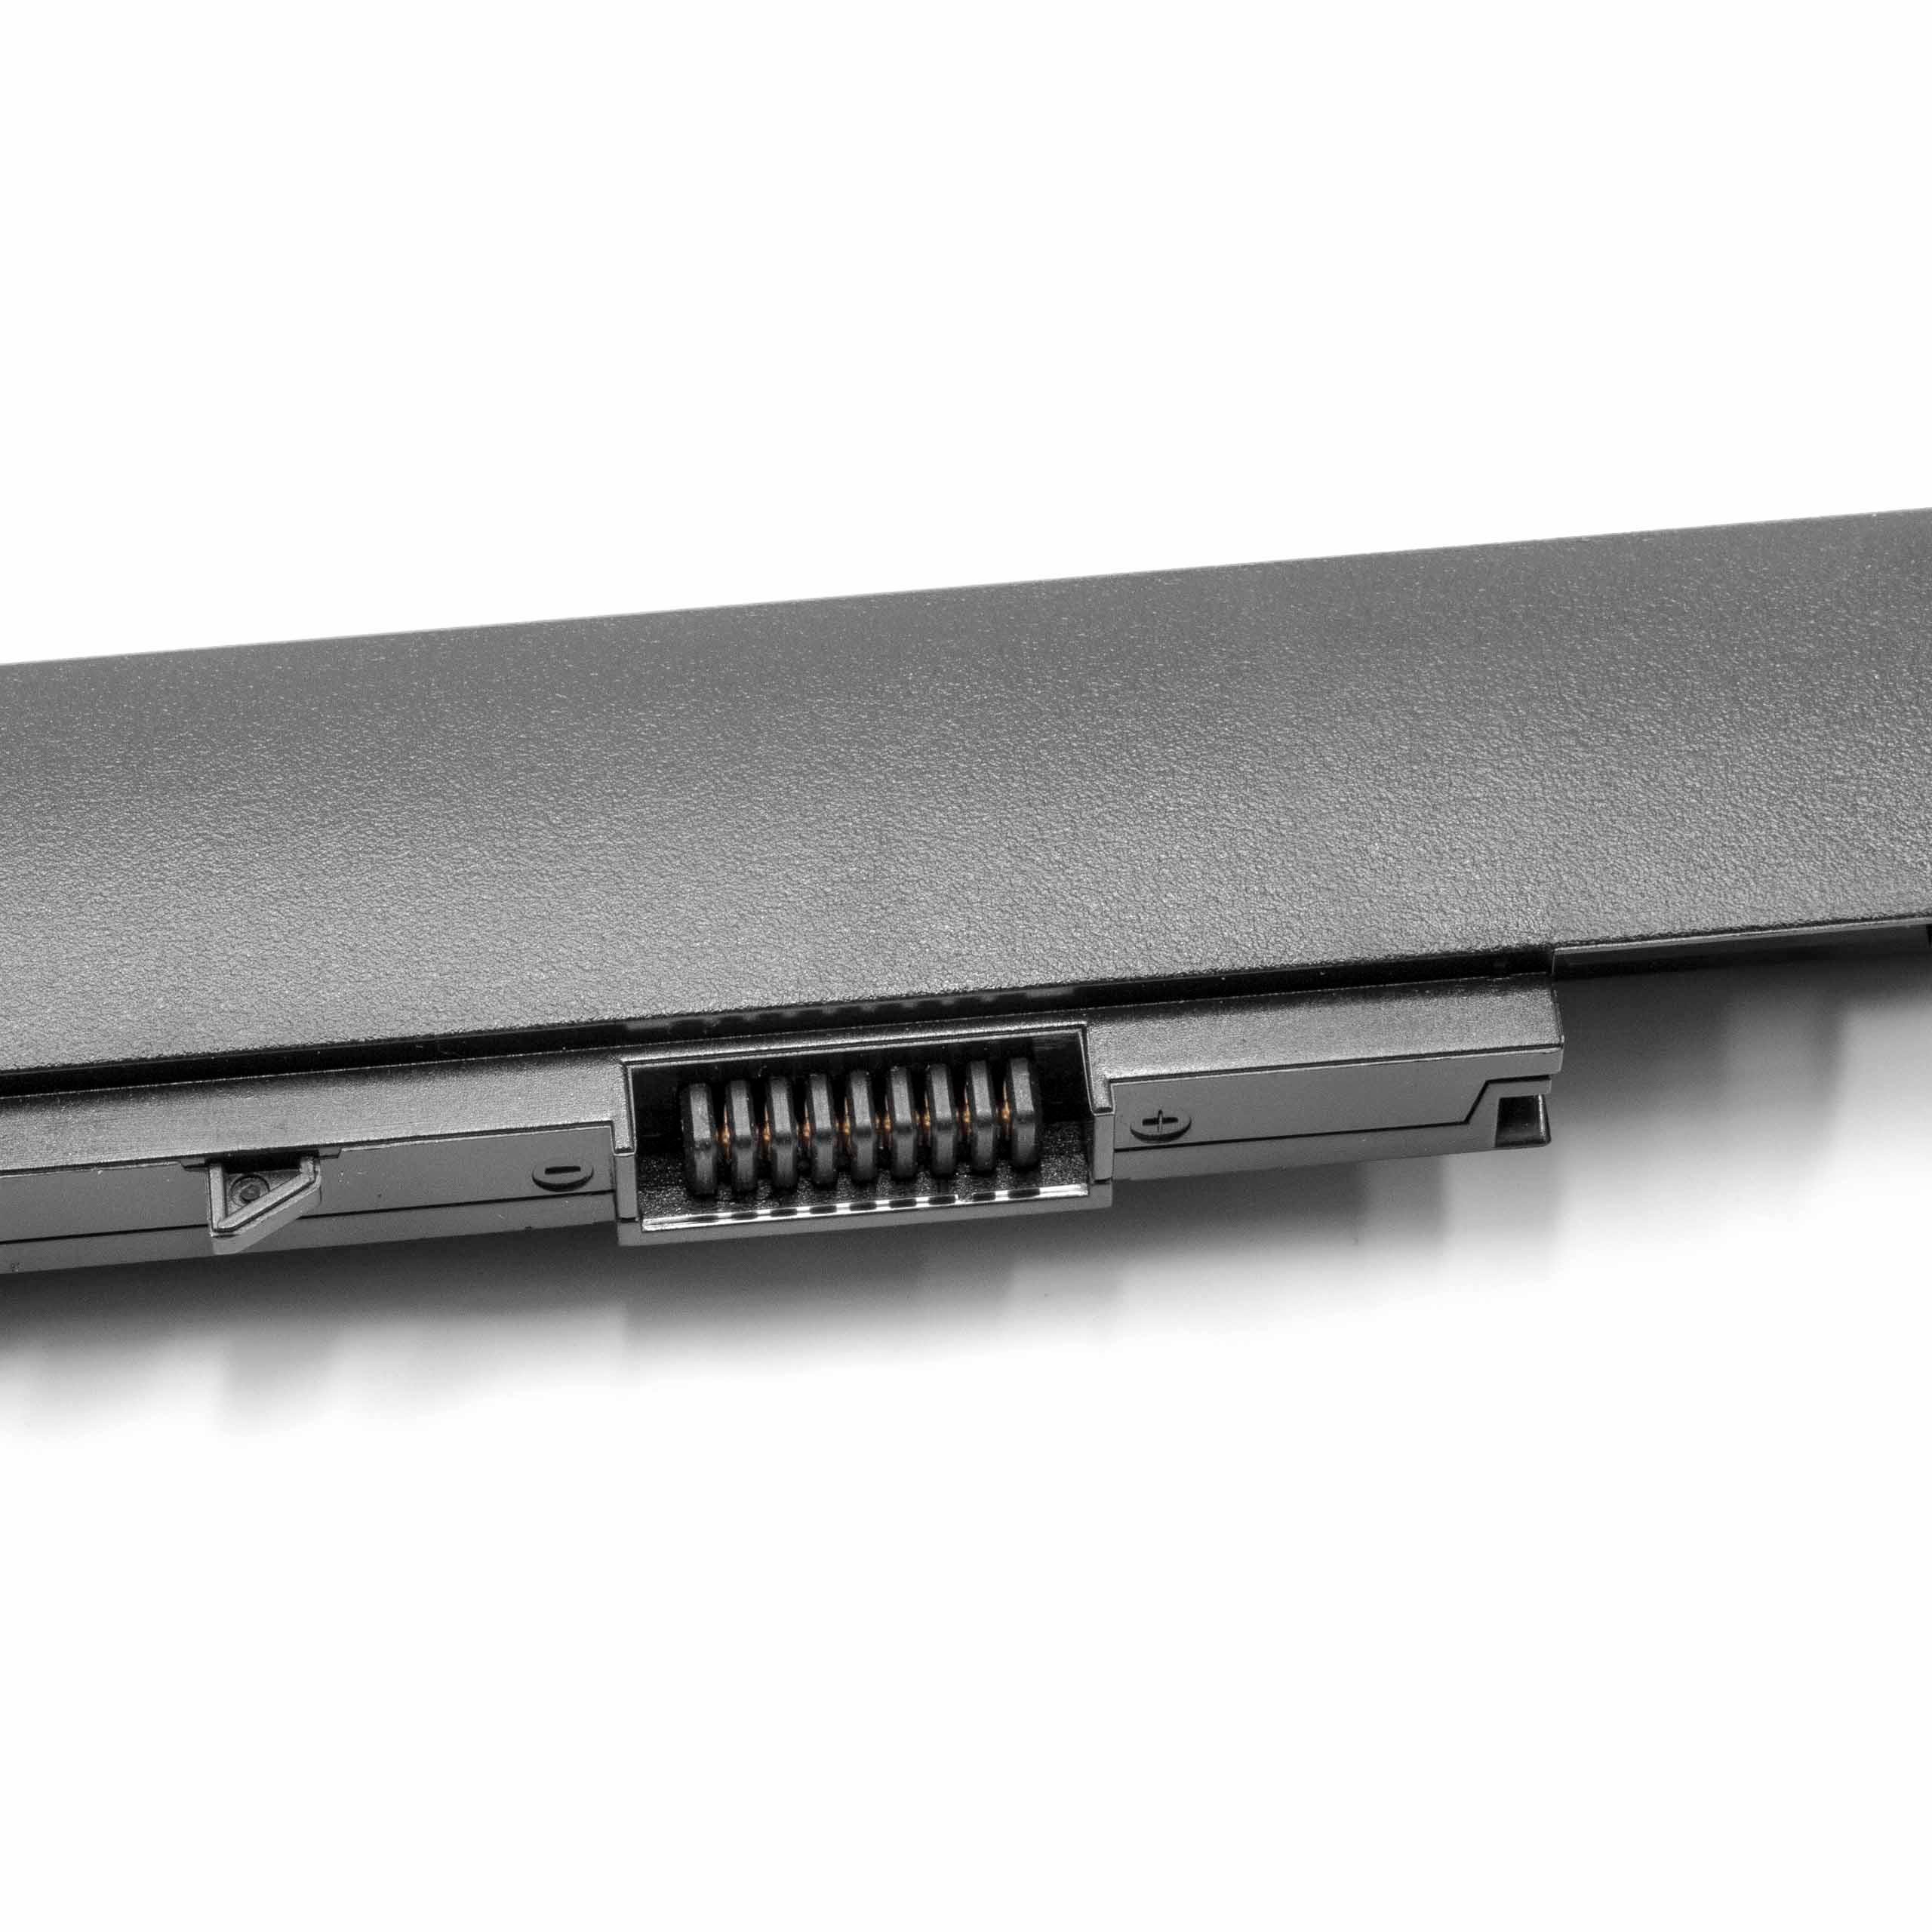 Batería reemplaza HP 807611-141, 807611-421, 807611-131 para notebook HP - 2600 mAh 14,8 V Li-Ion negro